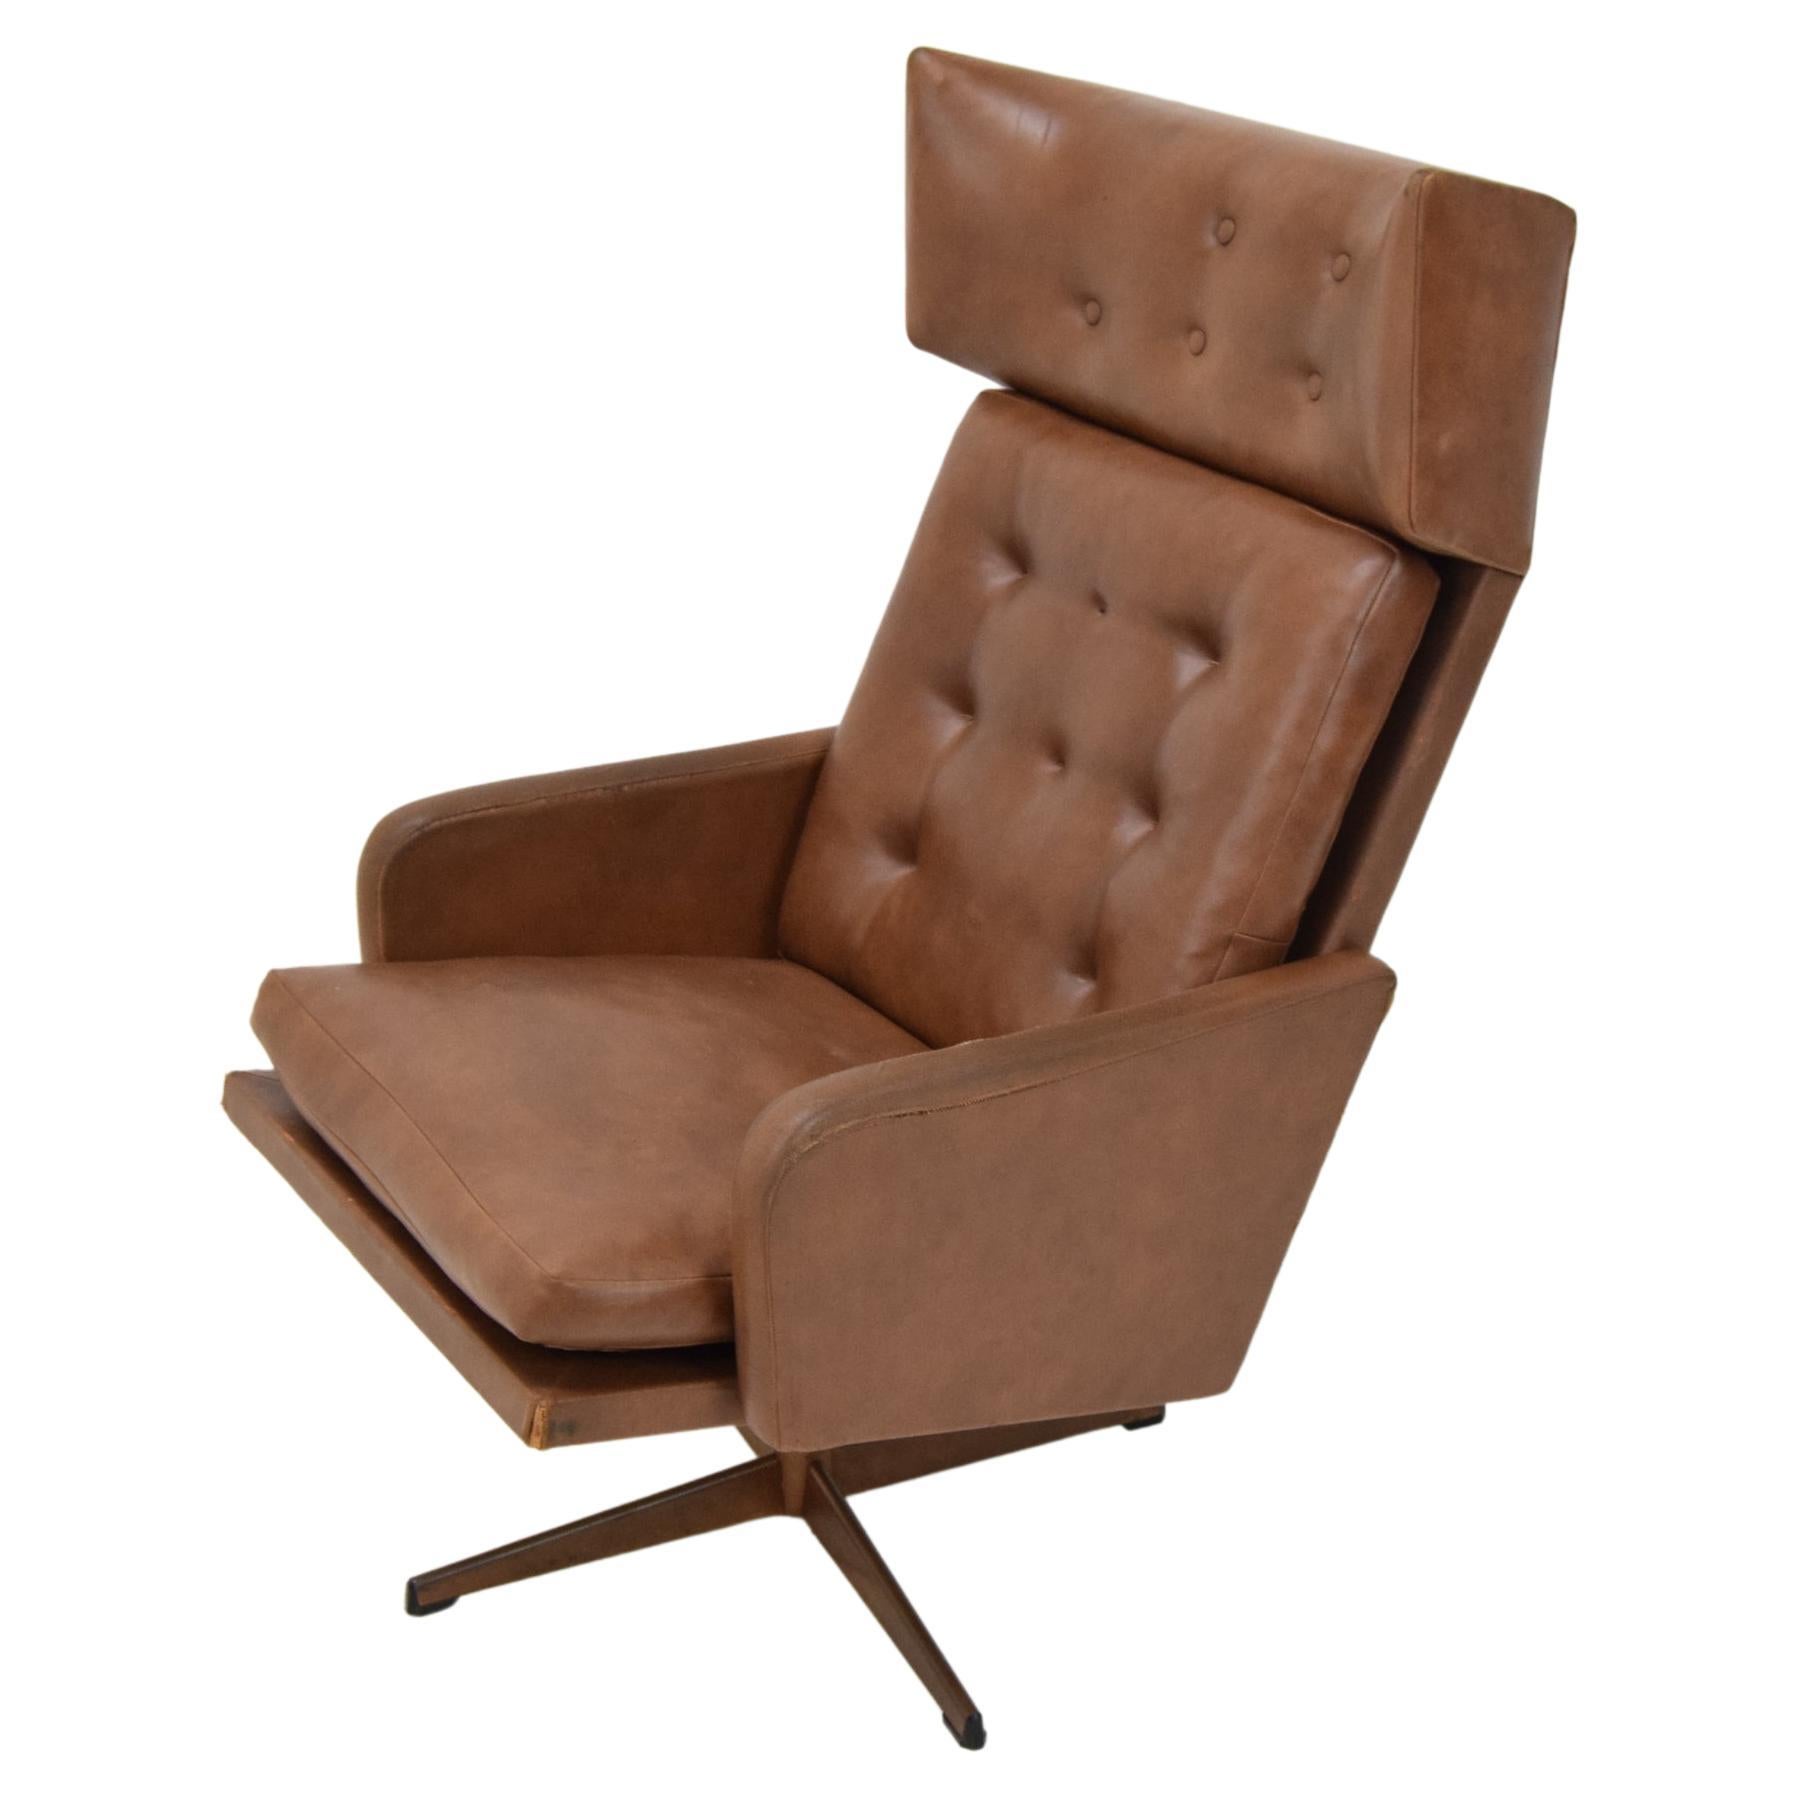 Drehbarer Kunstleder-Sessel aus der Mitte des Jahrhunderts, 1960er Jahre.  im Angebot